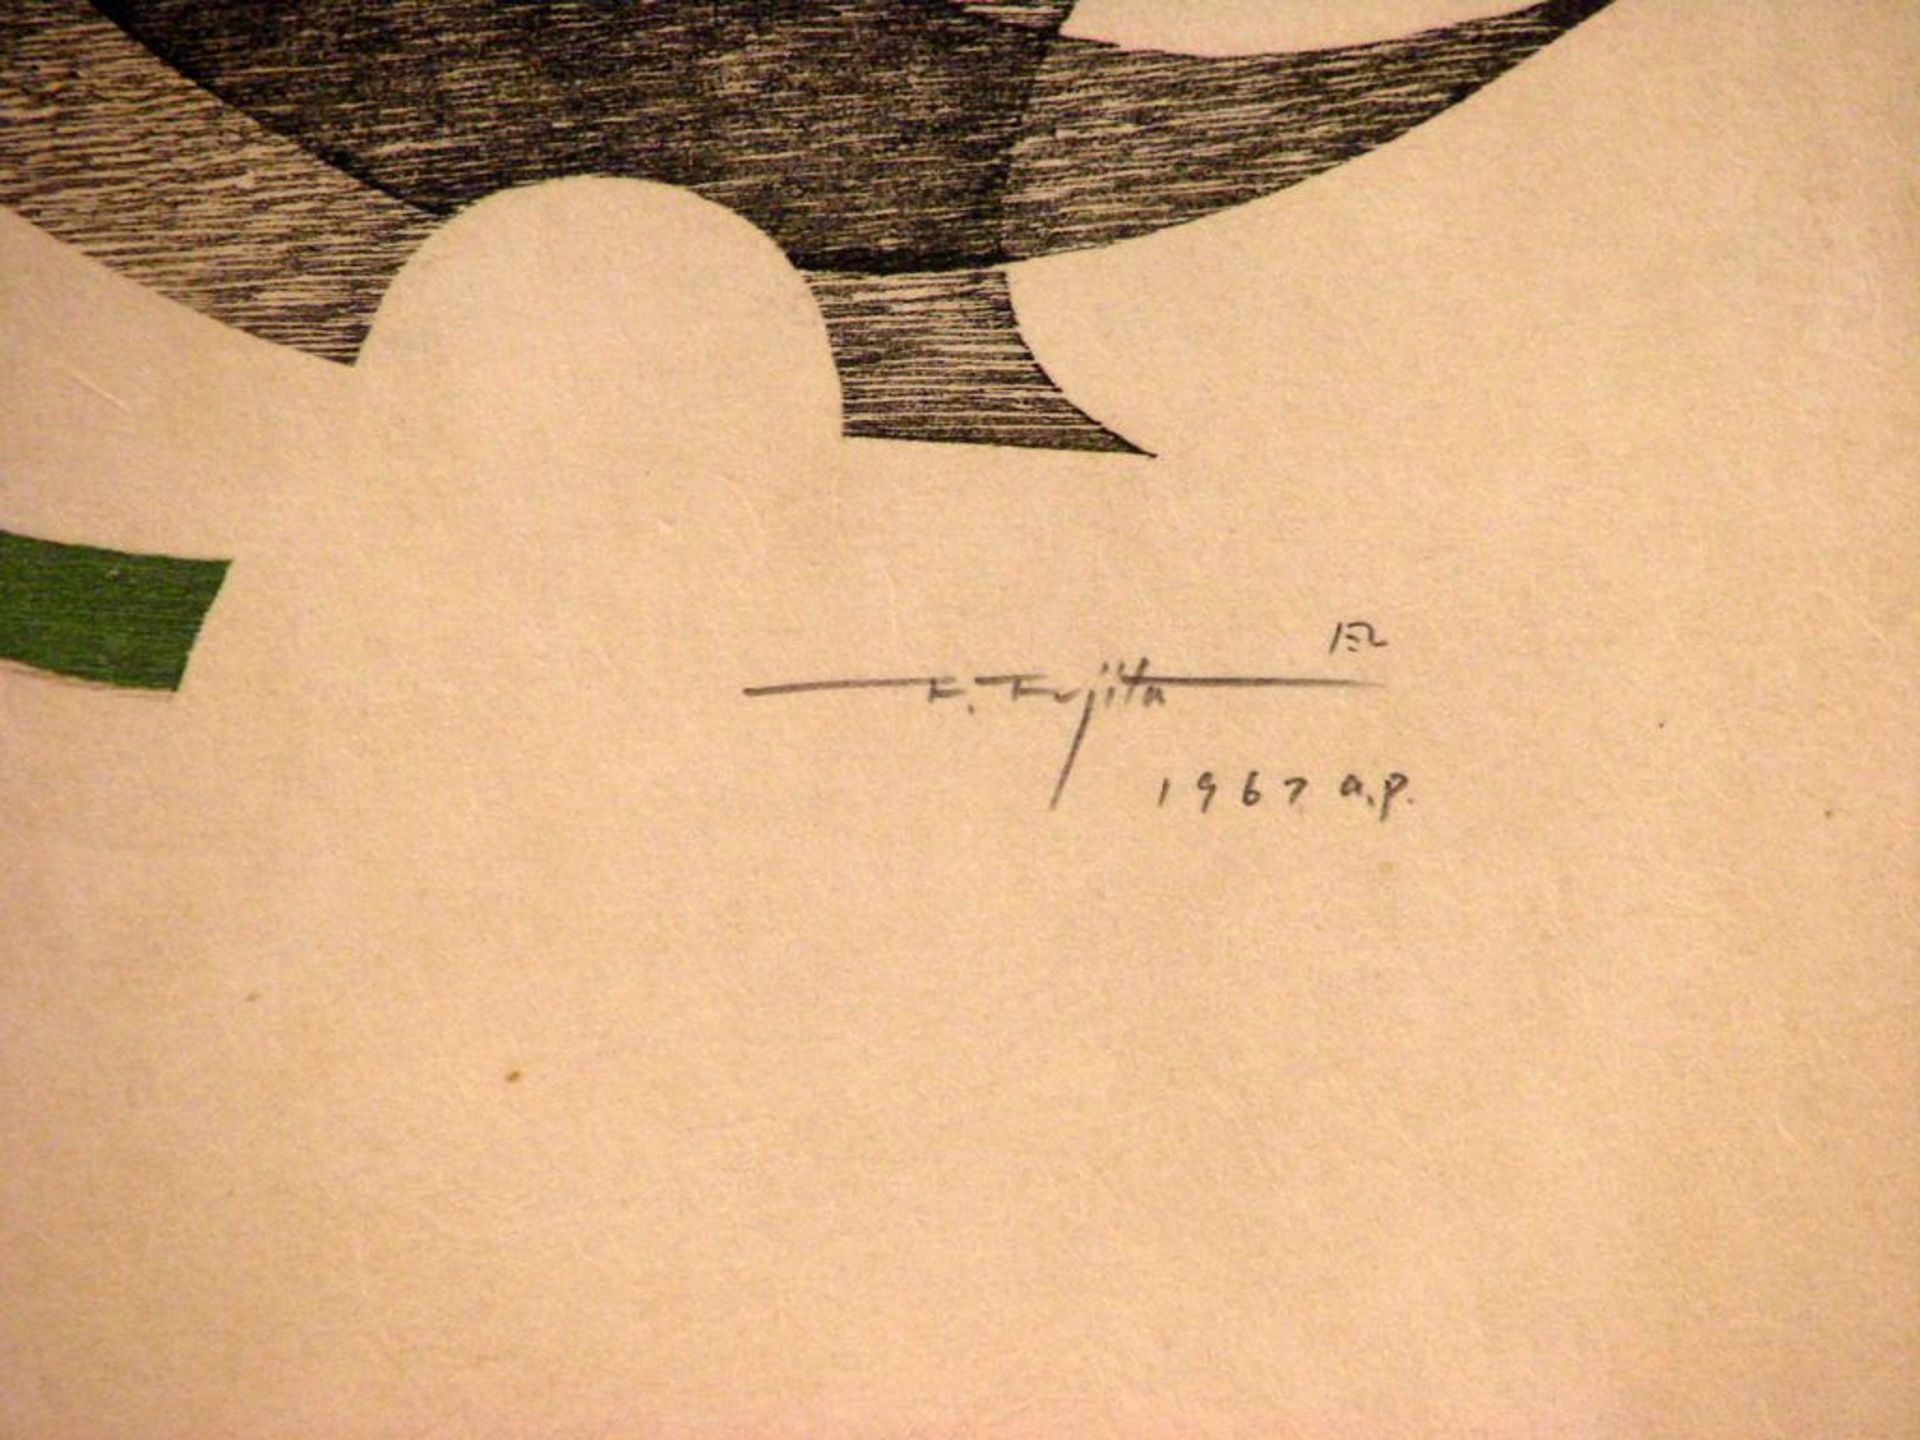 "Informel", Papierarbeit, u.re.sig., F.FUJITA, dat. 1967 a.p., ca. 29x41cm, Glasrahmen - Bild 2 aus 2